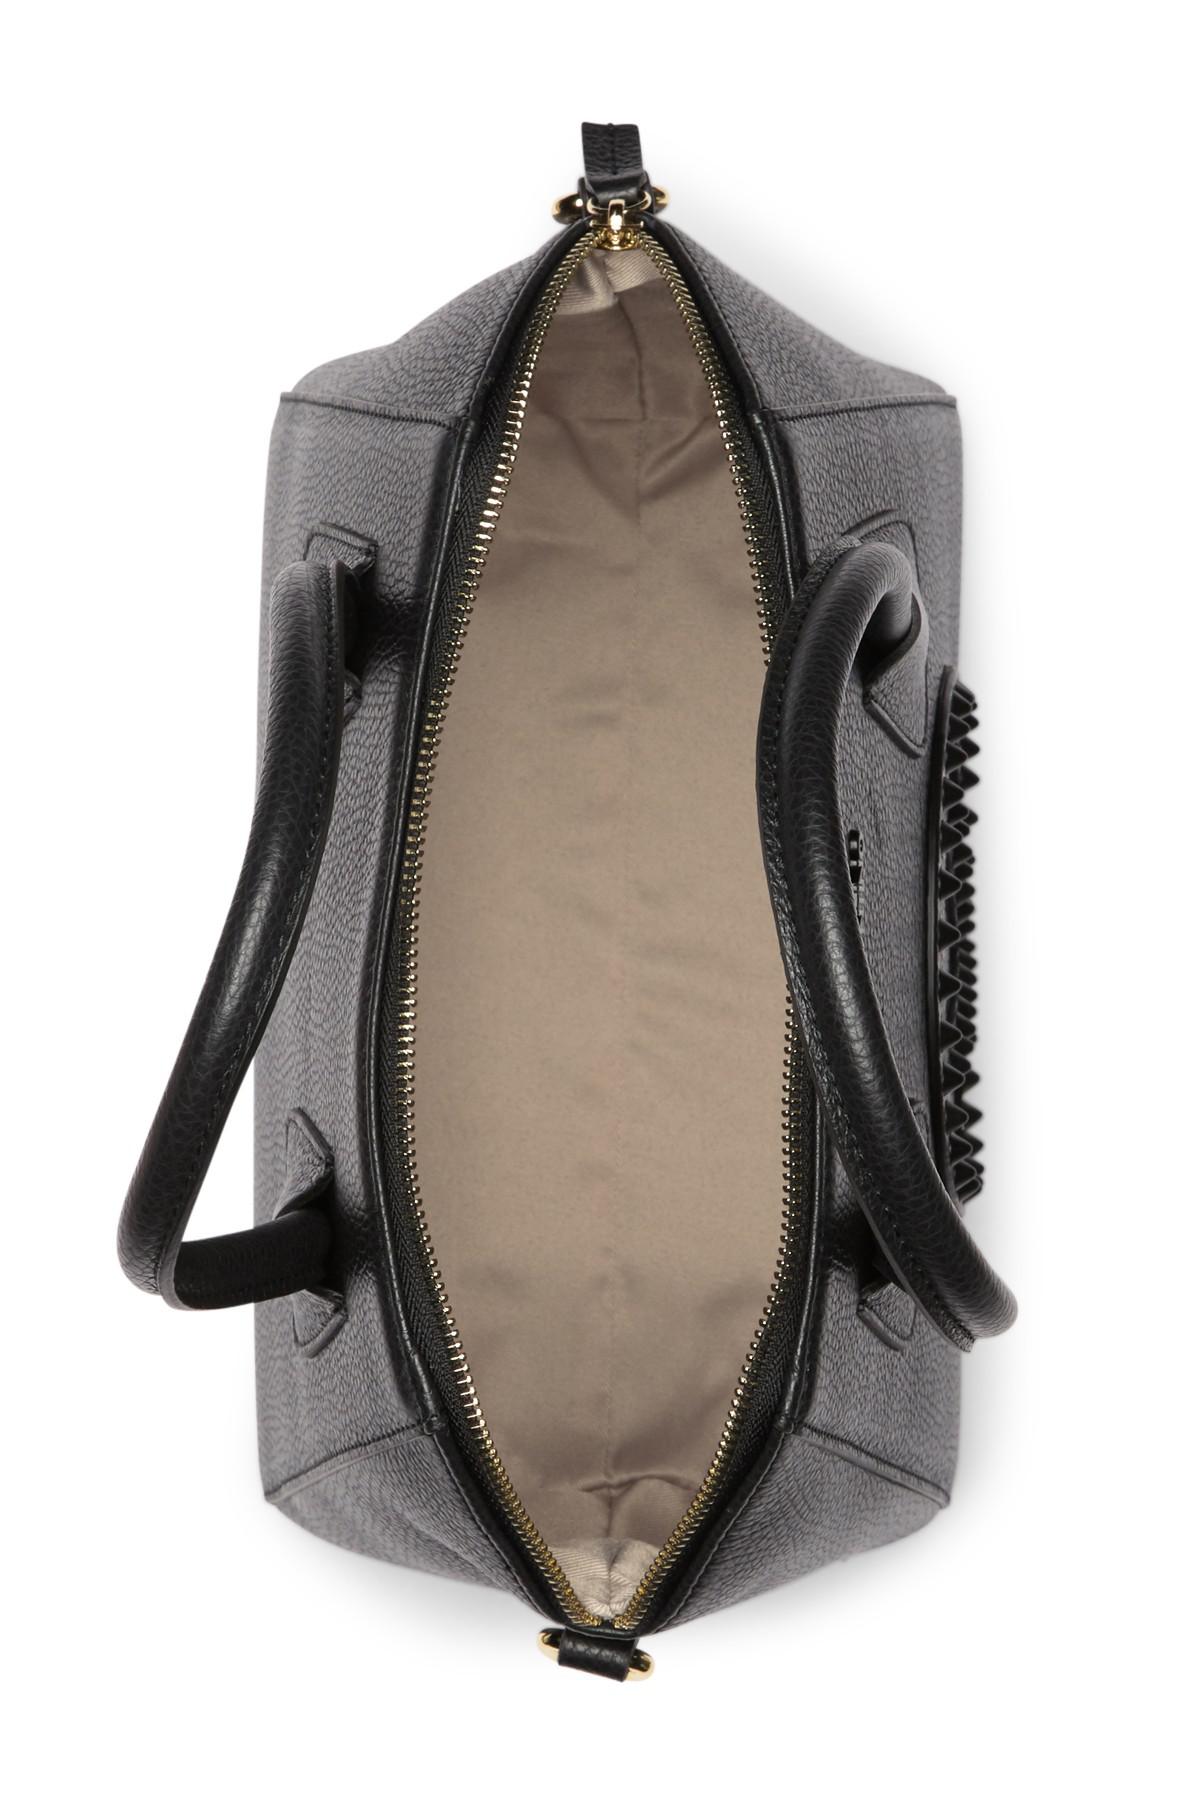 Lyst - Valentino By Mario Valentino Minimi Rock Leather Satchel in Black